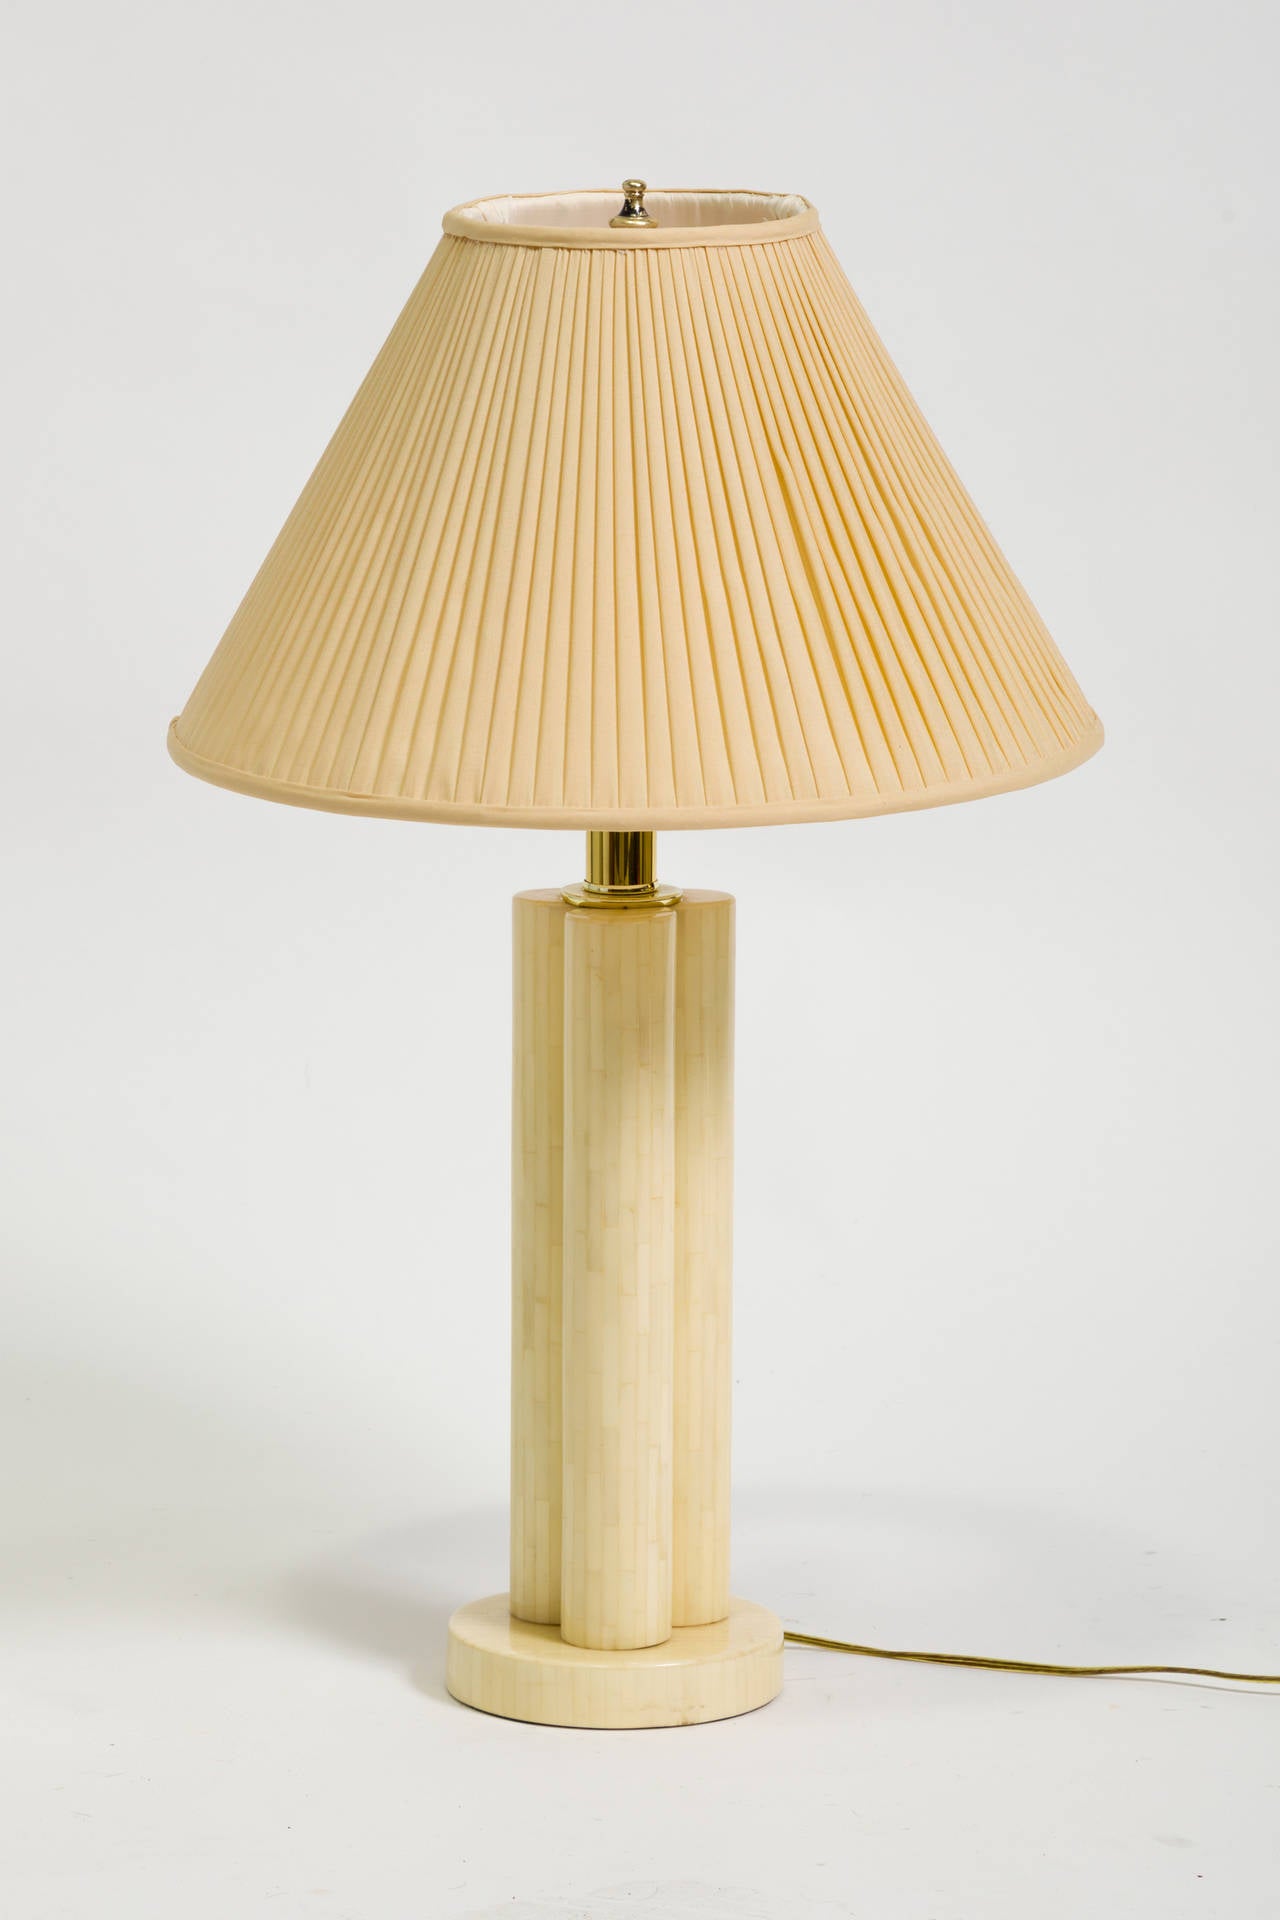 Bone Table Lamp In the Style of Karl Springer 2